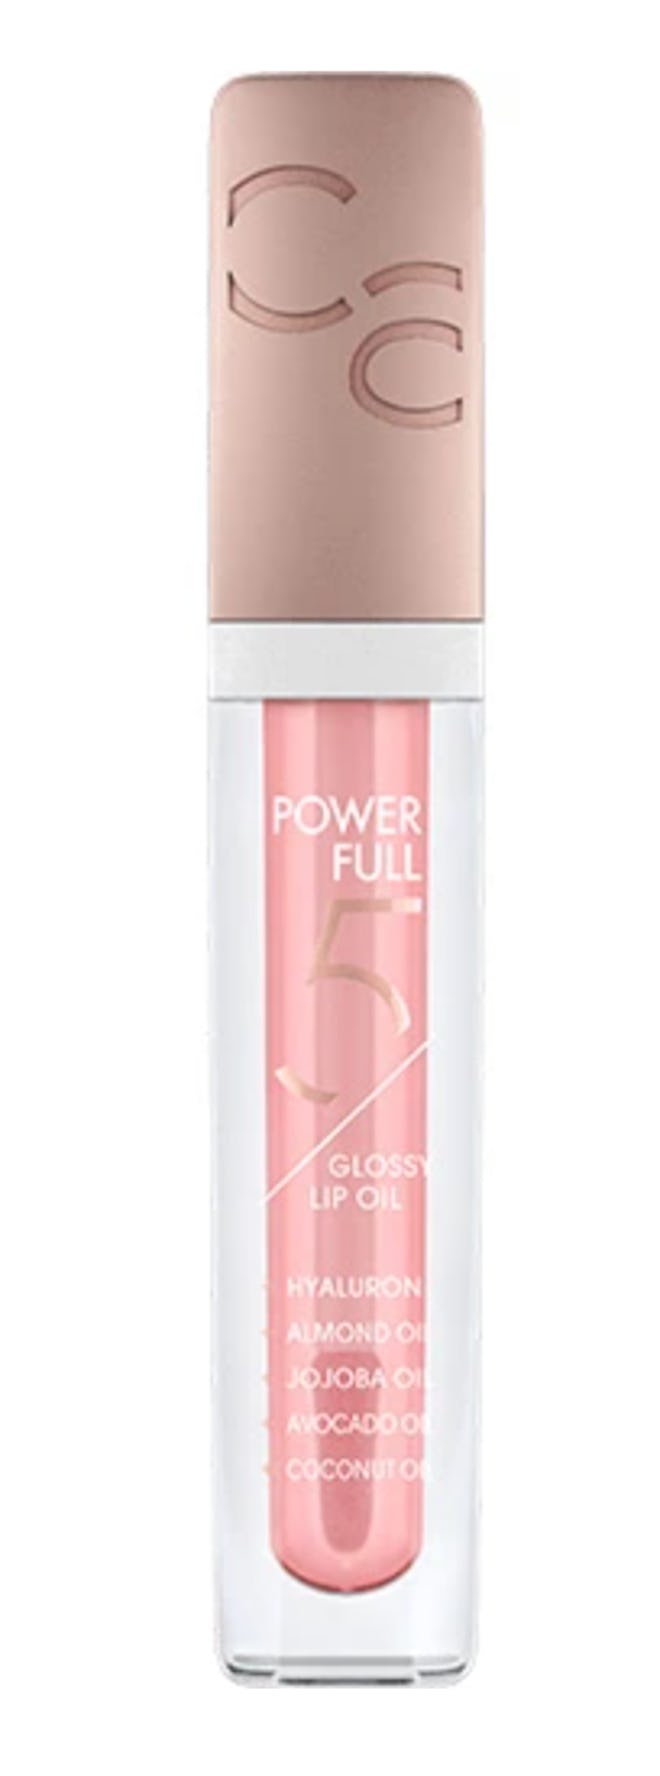 Powerfull 5 Glossy Lip Oil - Cherry Blossom Glow